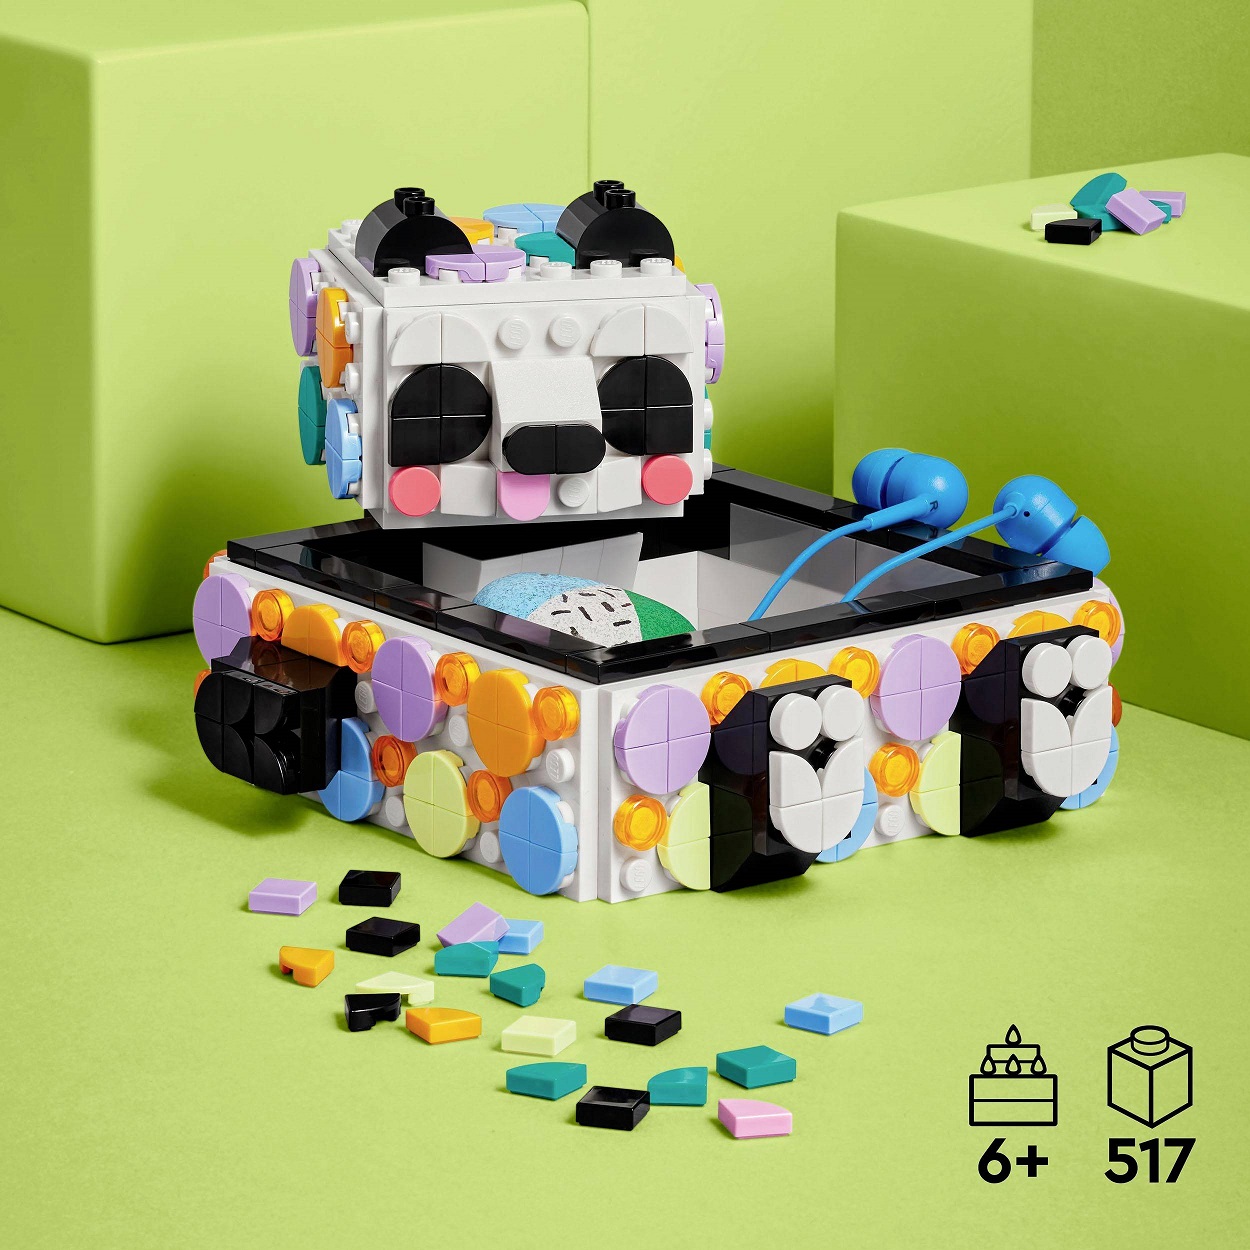 Конструктор LEGO DOTs Ящик з милою пандою, 517 деталей (41959) - фото 5